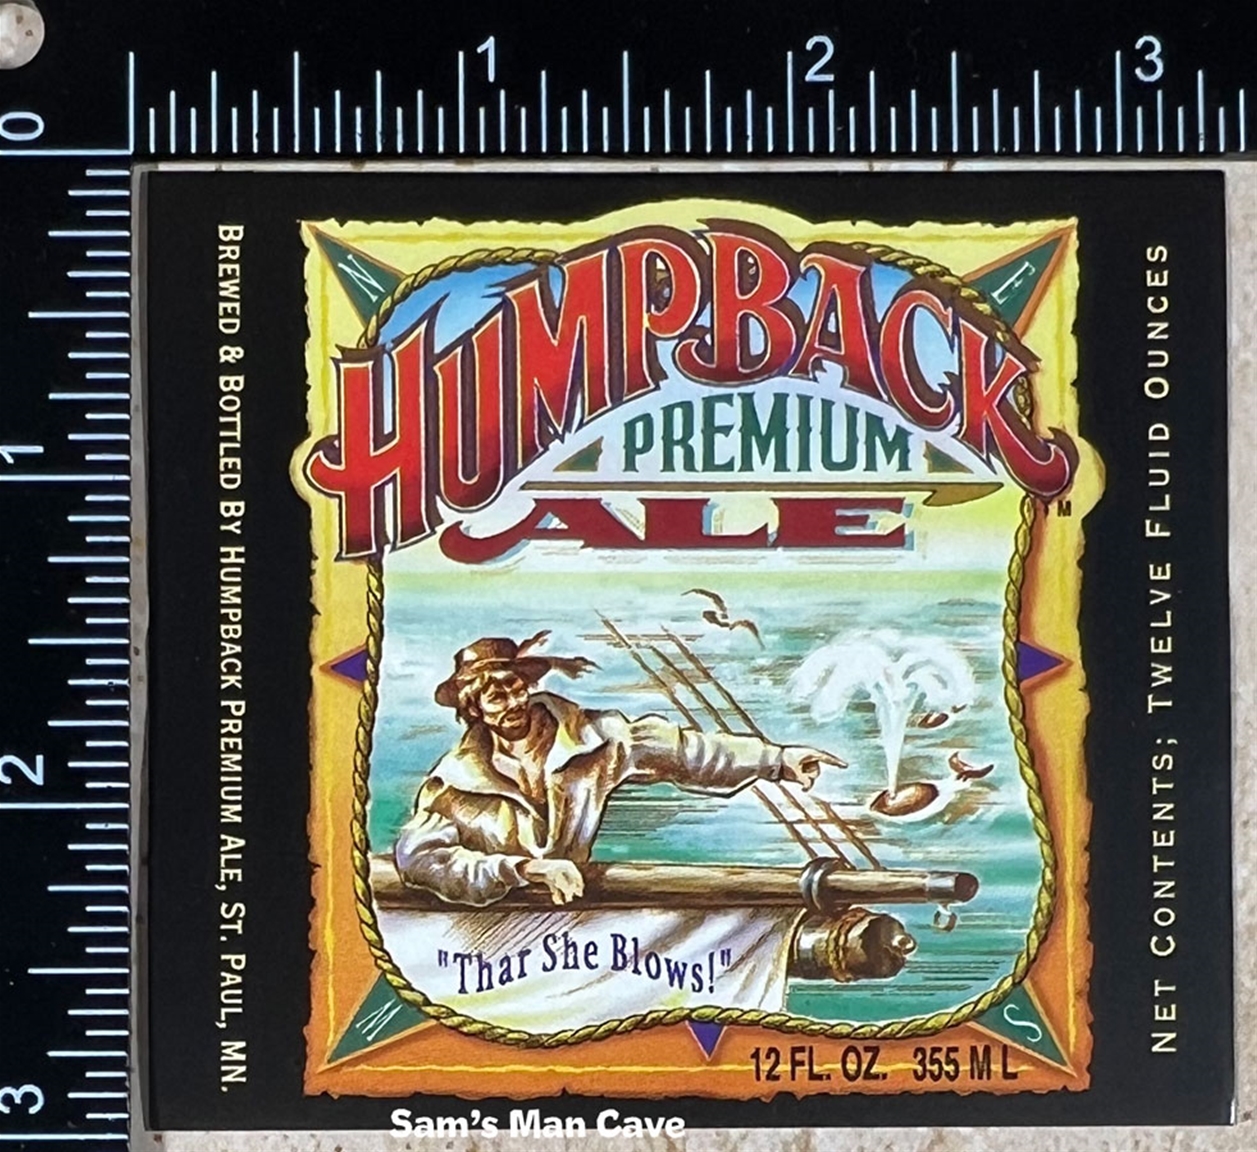 Humpback Premium Ale Label